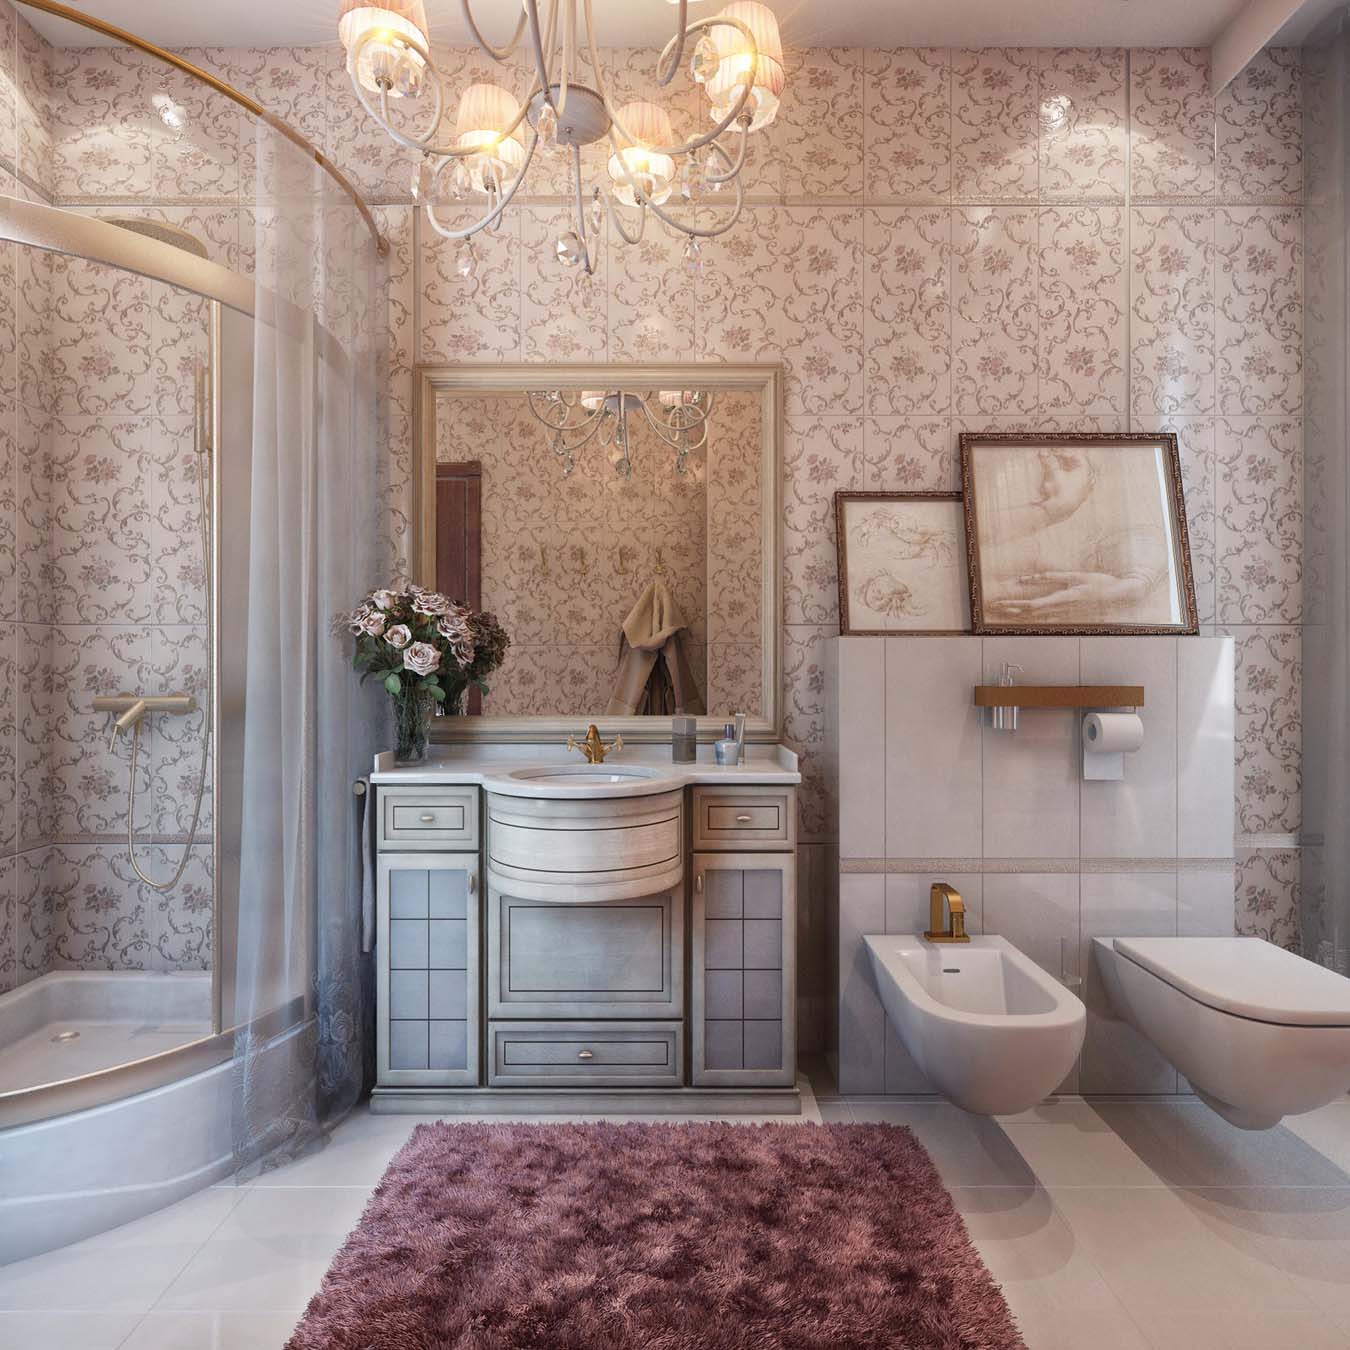 French Classic Interior Of The Bathroom - Classic Interior Design Bathroom - HD Wallpaper 